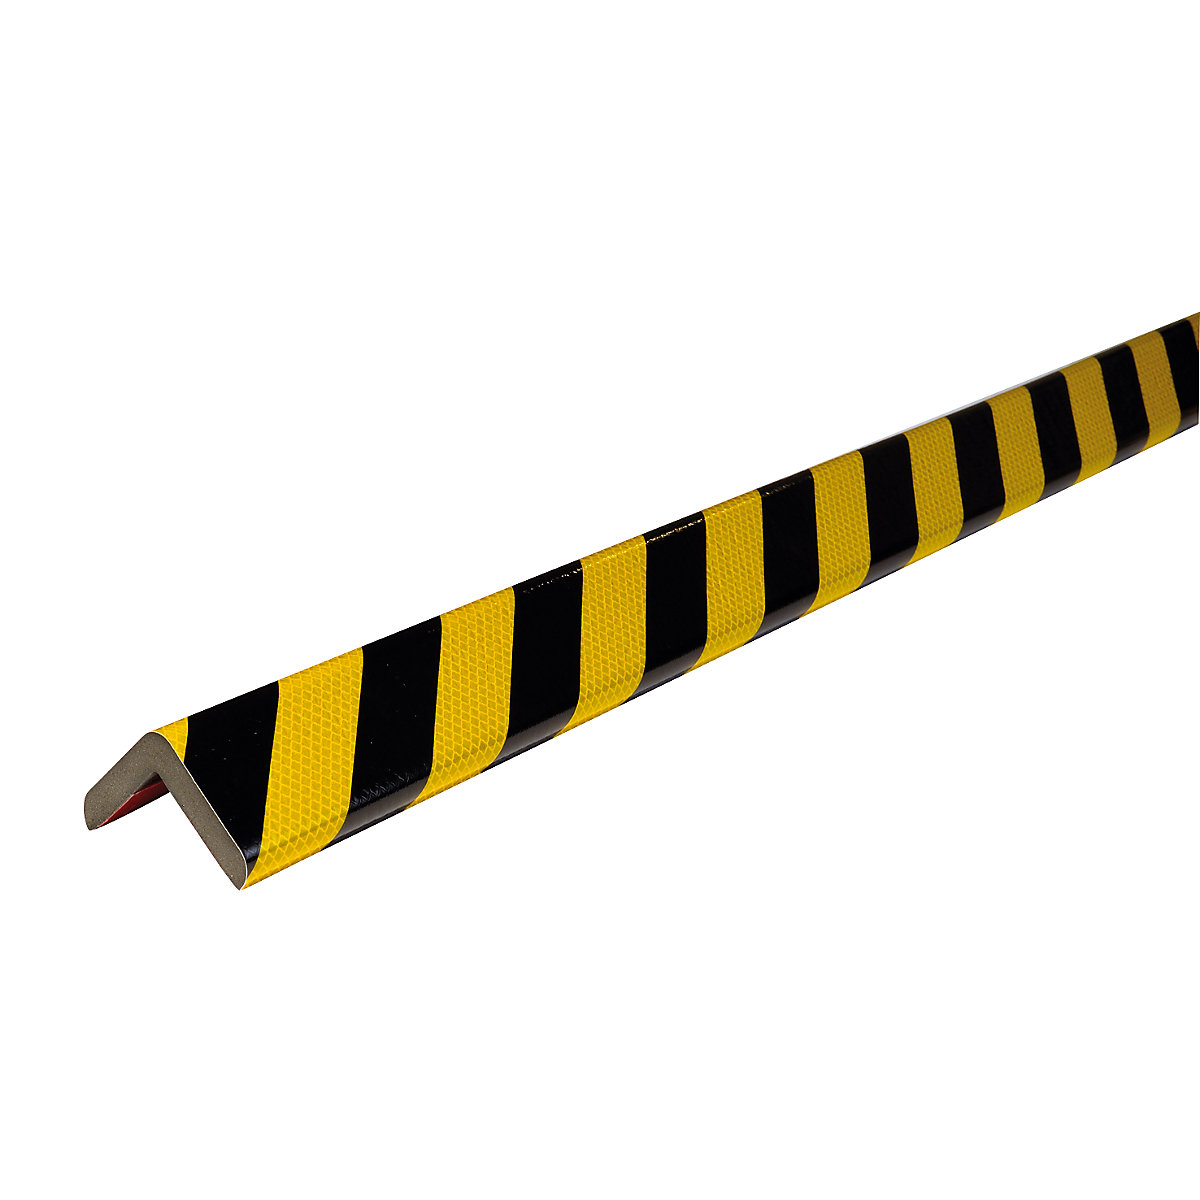 Knuffi® corner protection – SHG, type H+, 1 m piece, black / yellow, reflective-15